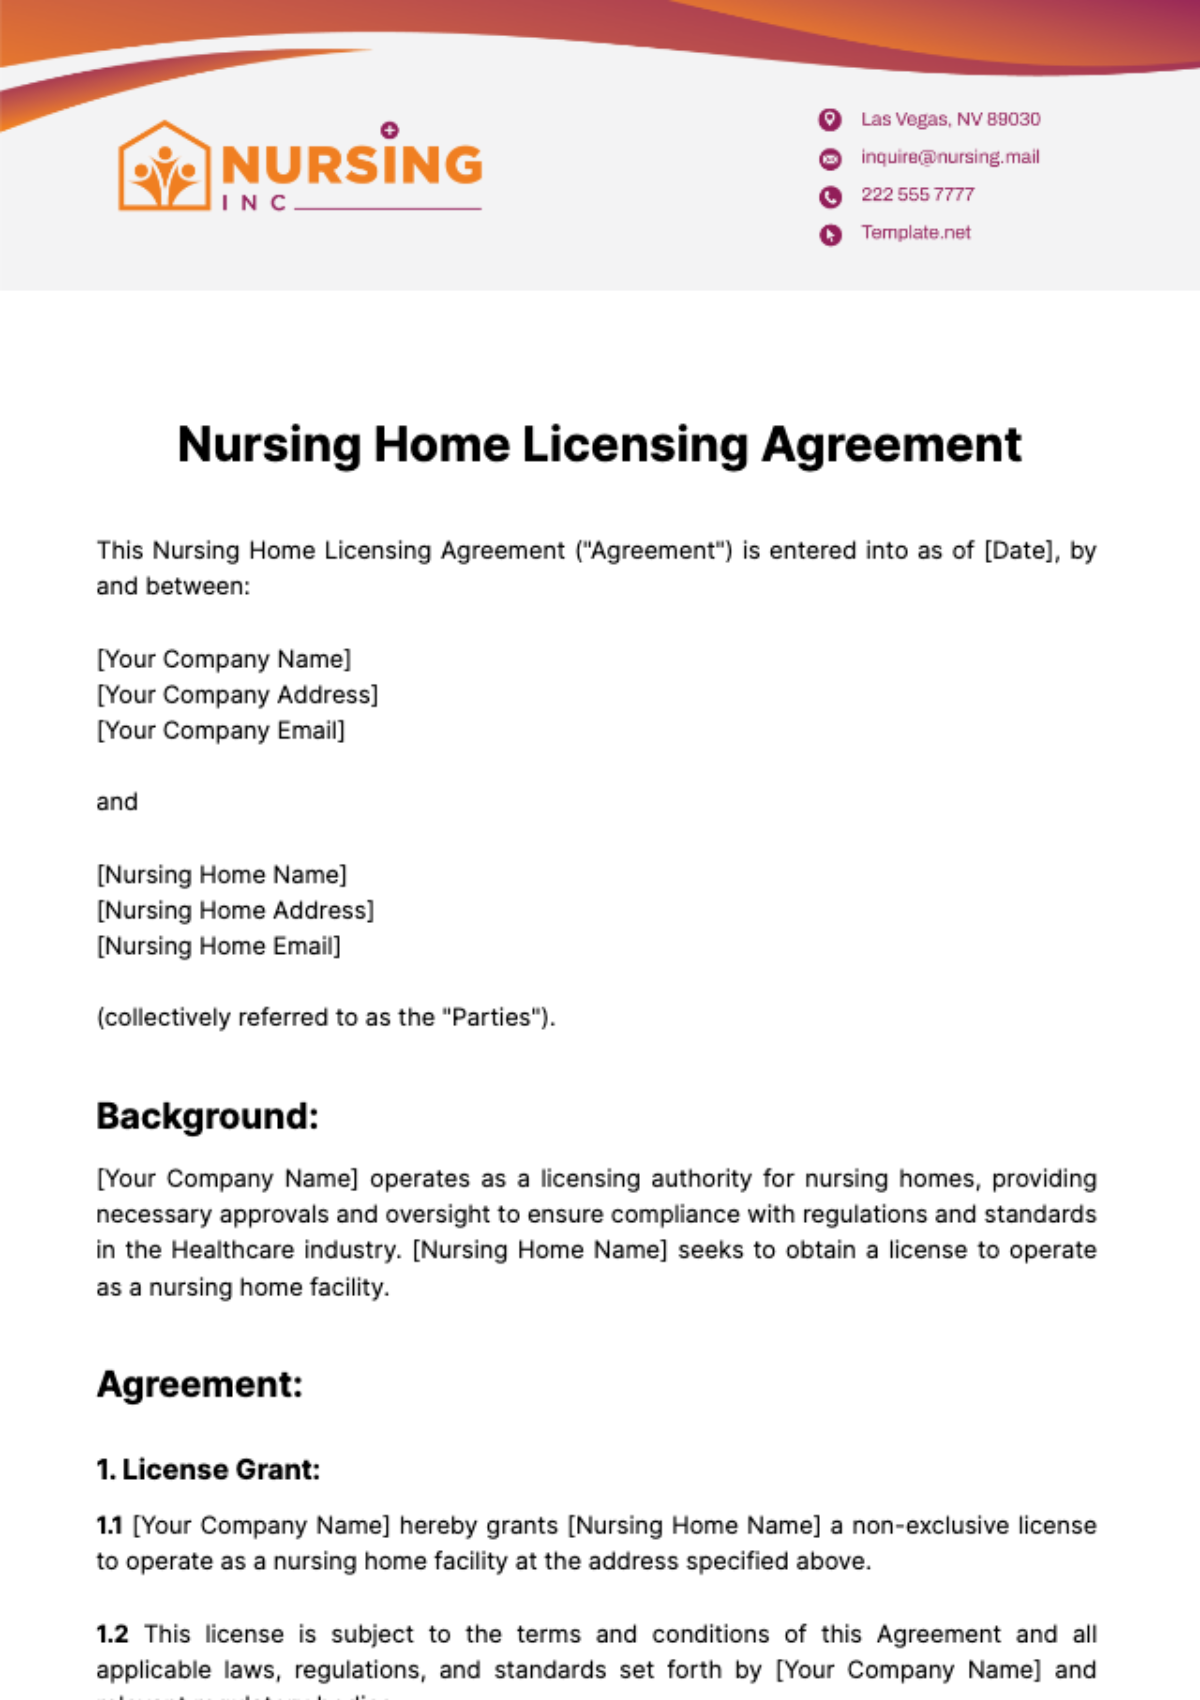 Nursing Home Licensing Agreement Template